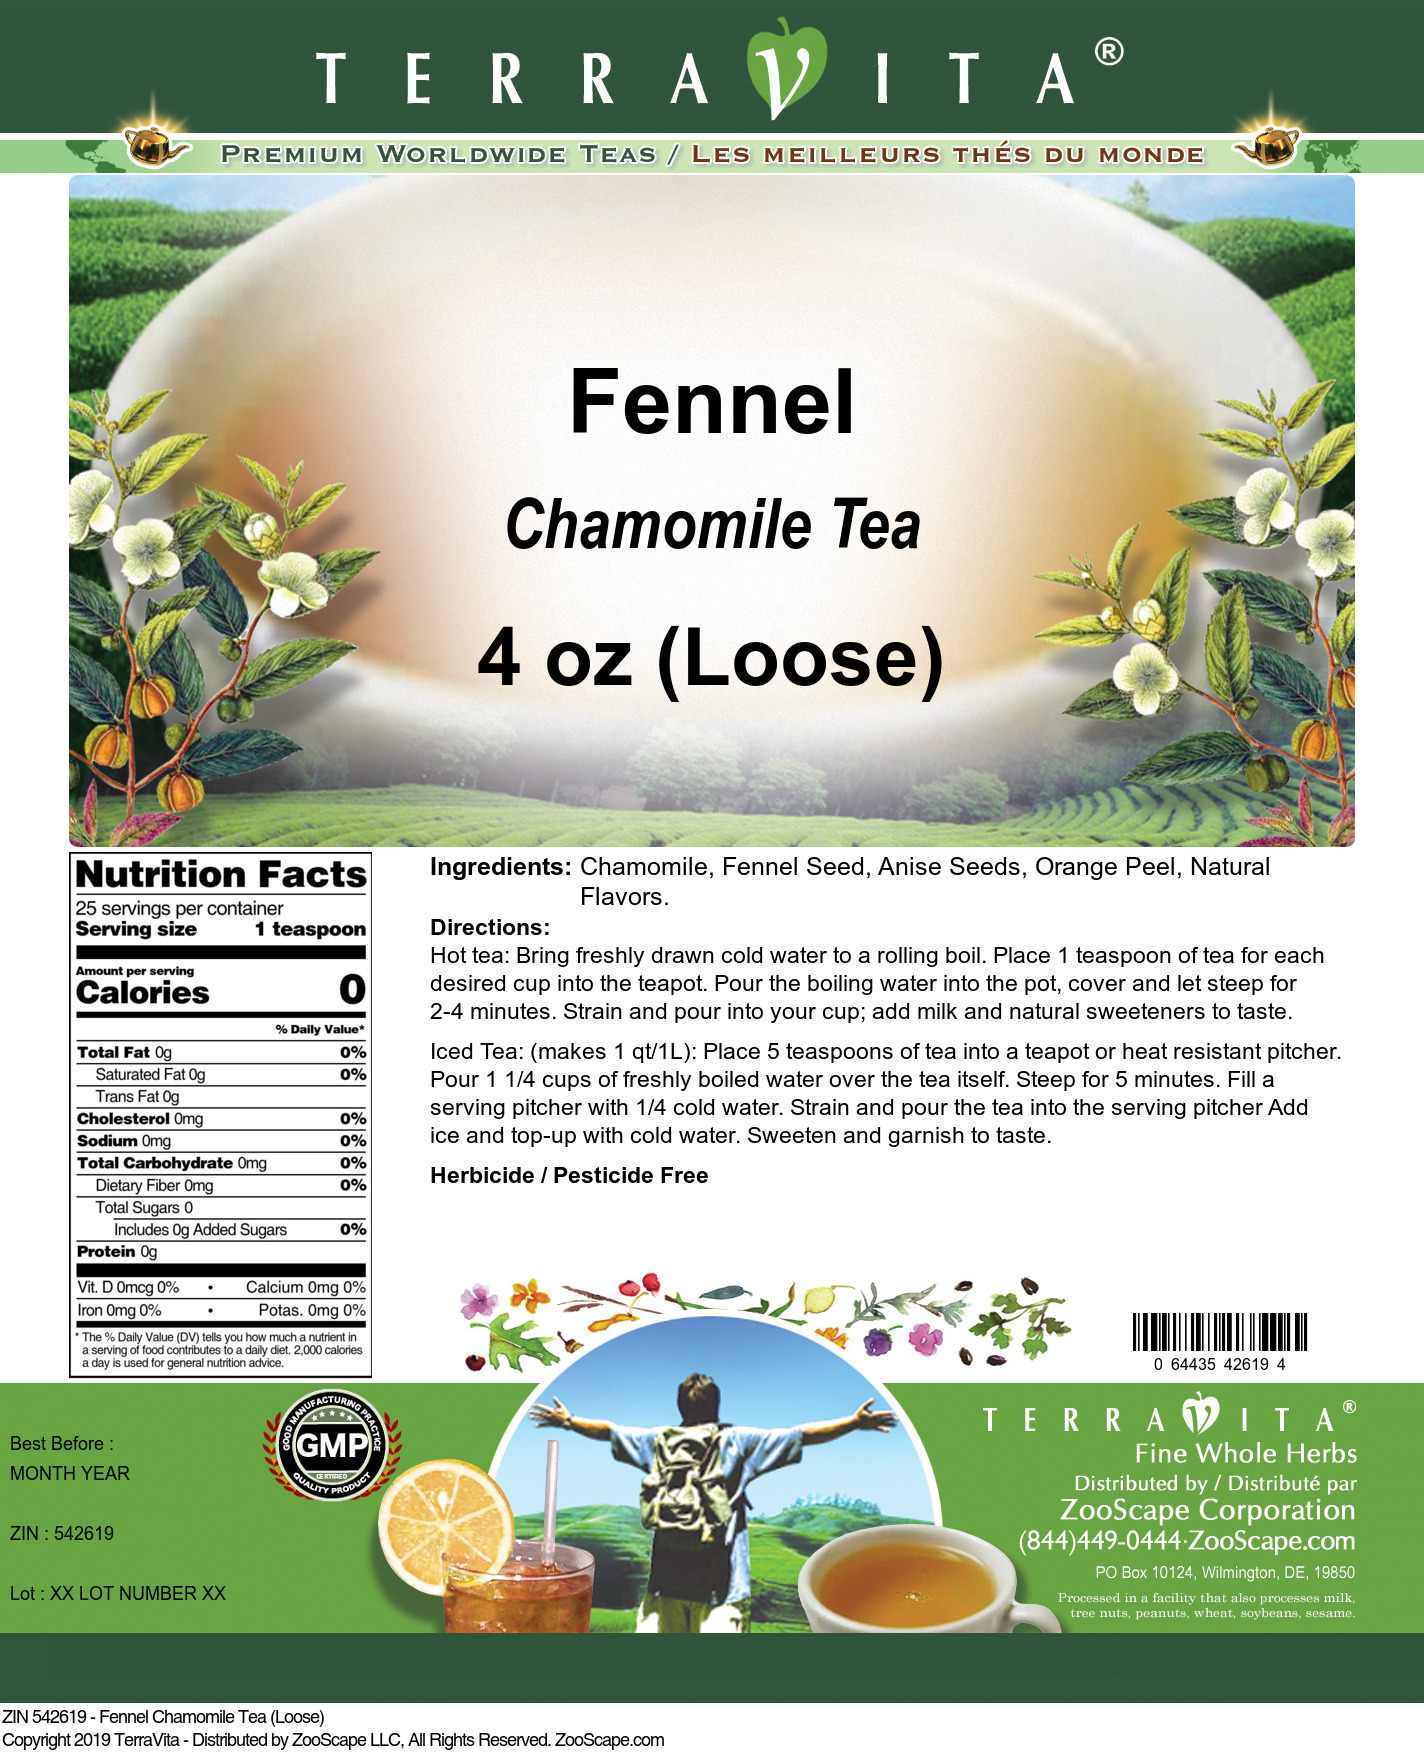 Fennel Chamomile Tea (Loose) - Label